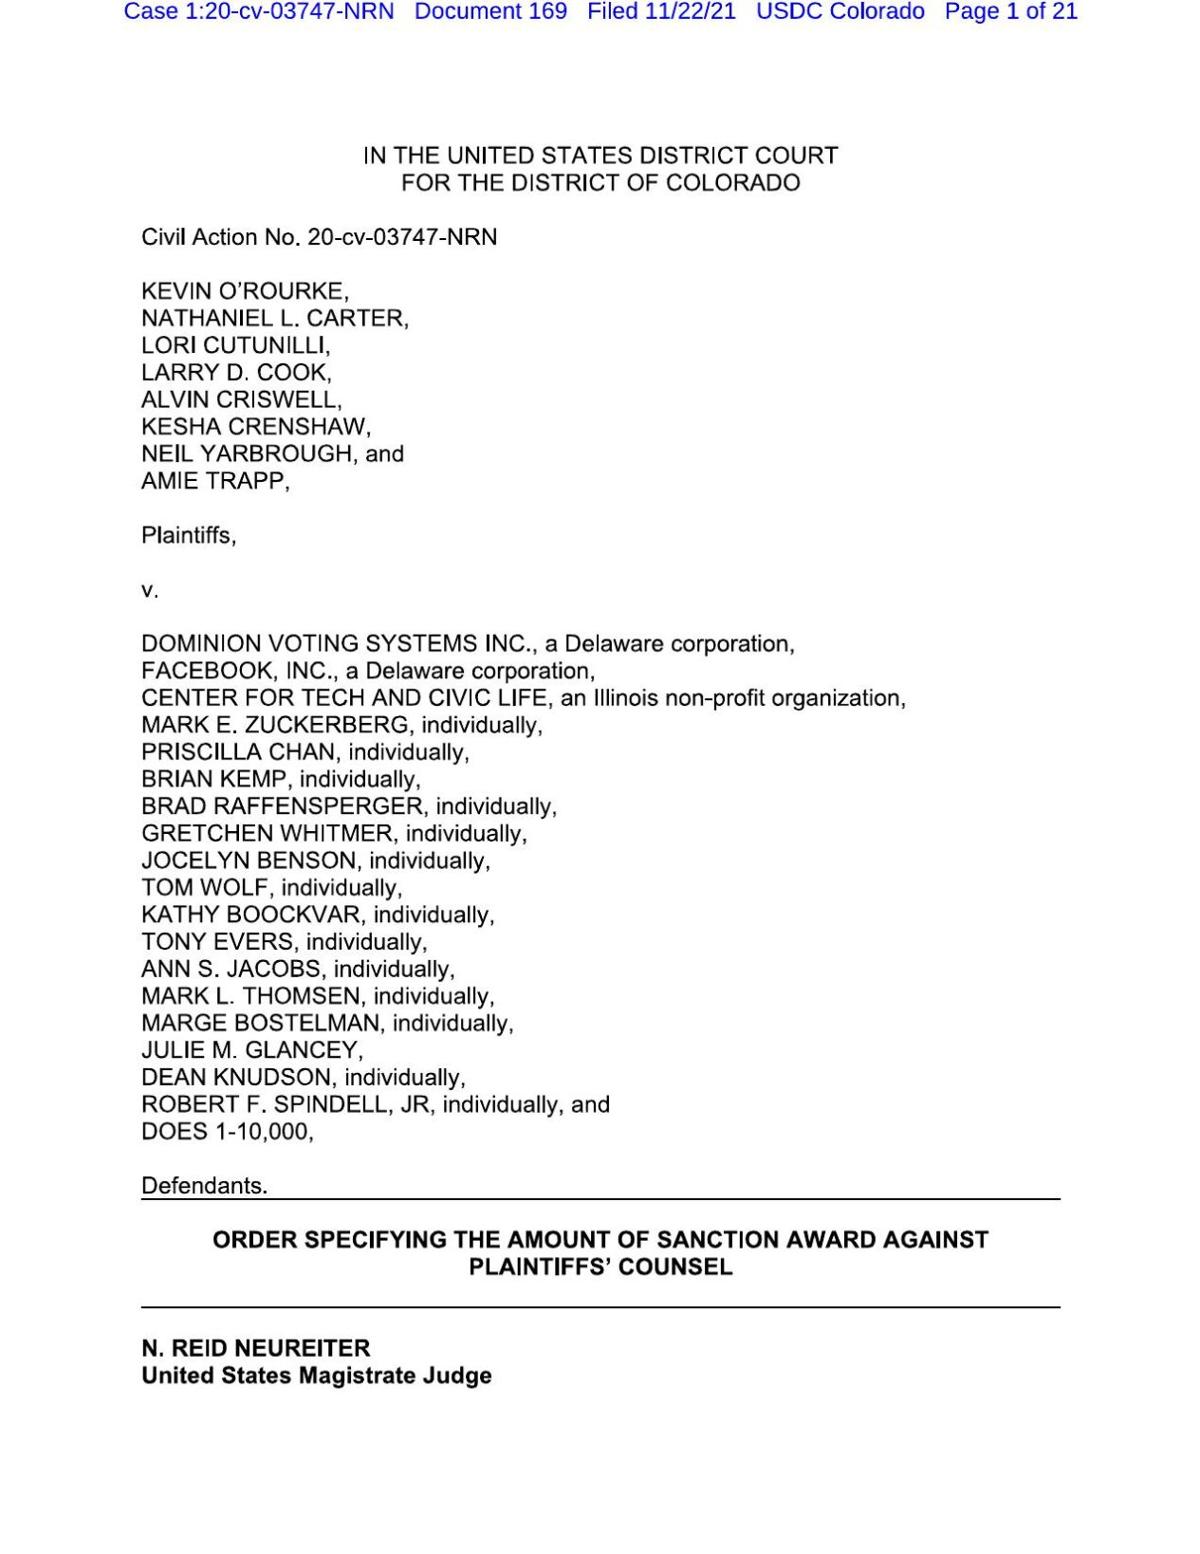 Order re Awarded Fees for Sanctions.pdf (4623.00 KiB)